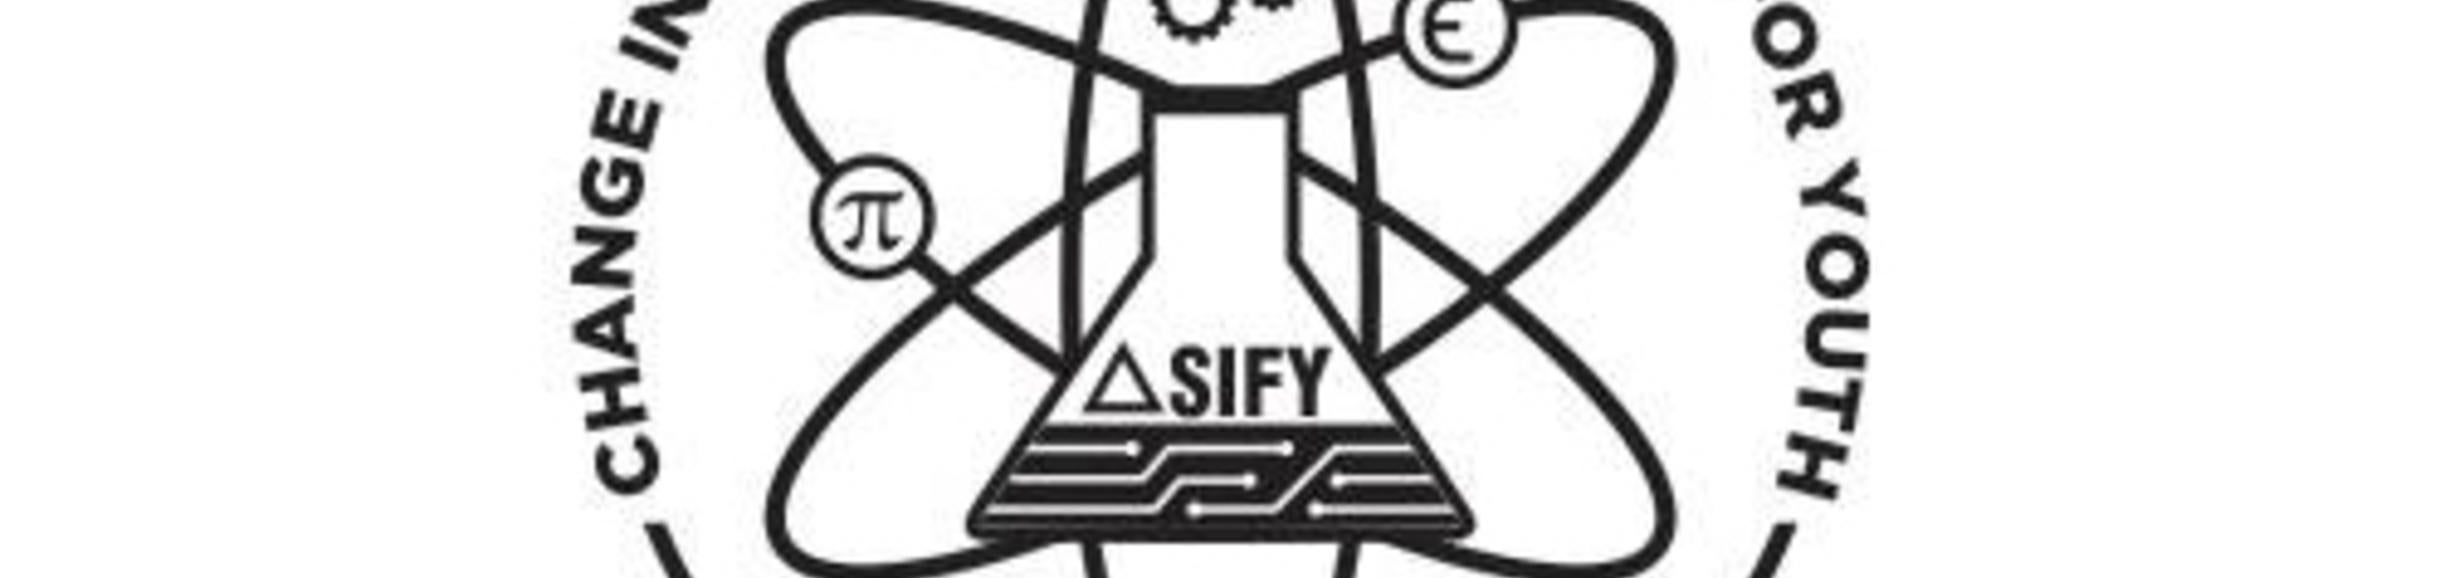 Delta SIFY logo